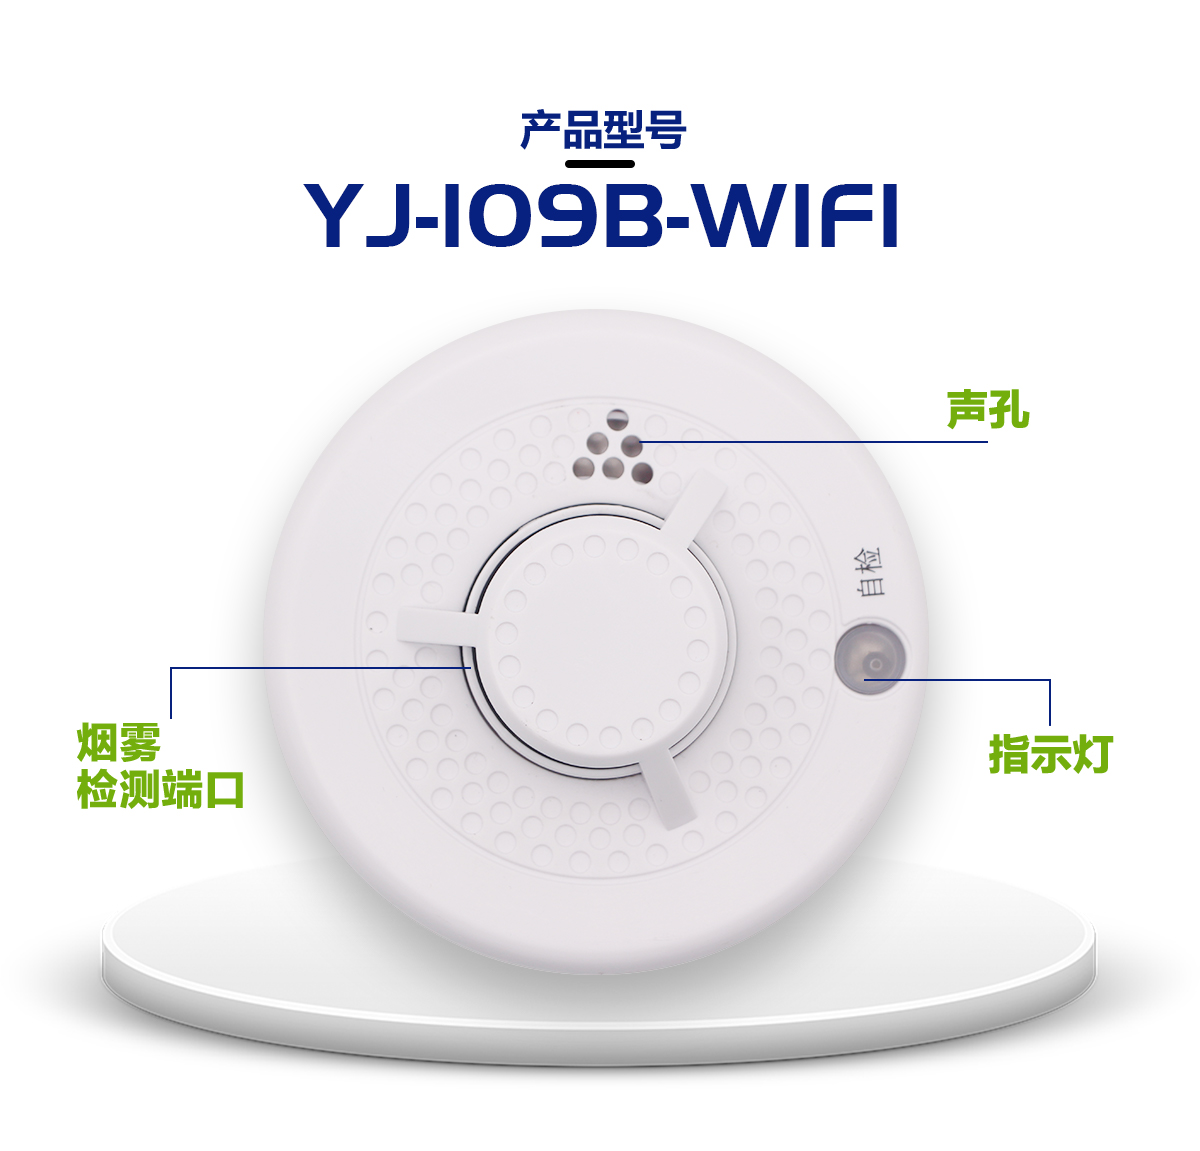 WIFI智能产品 YJ-109B-WIFI